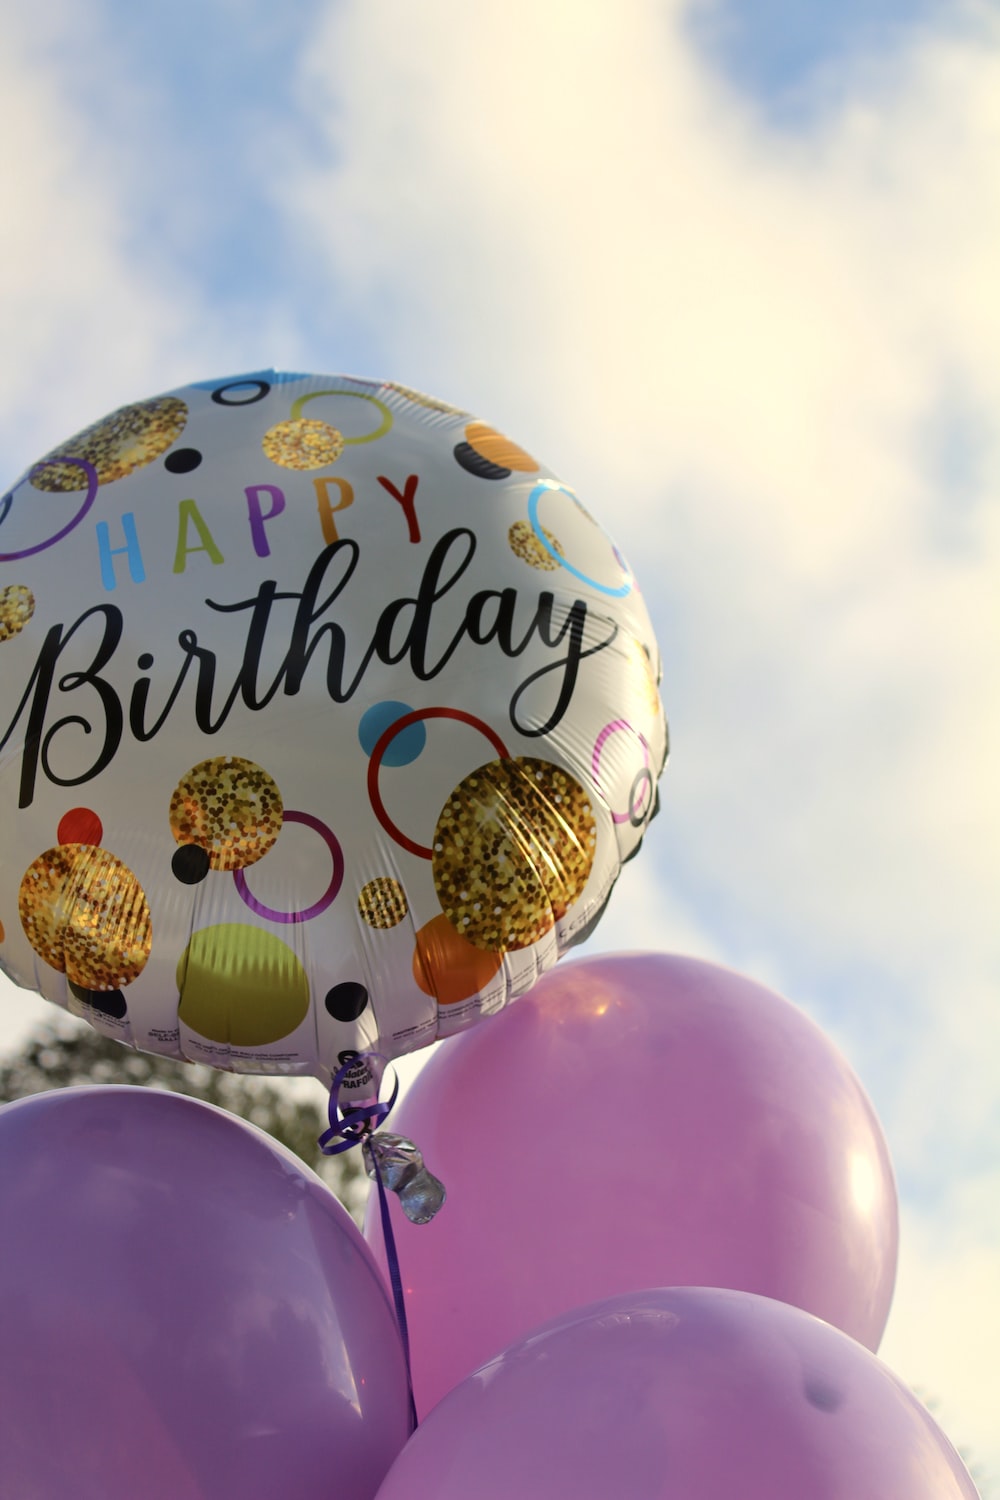 Happy birthday balloons with happy birthday text photo